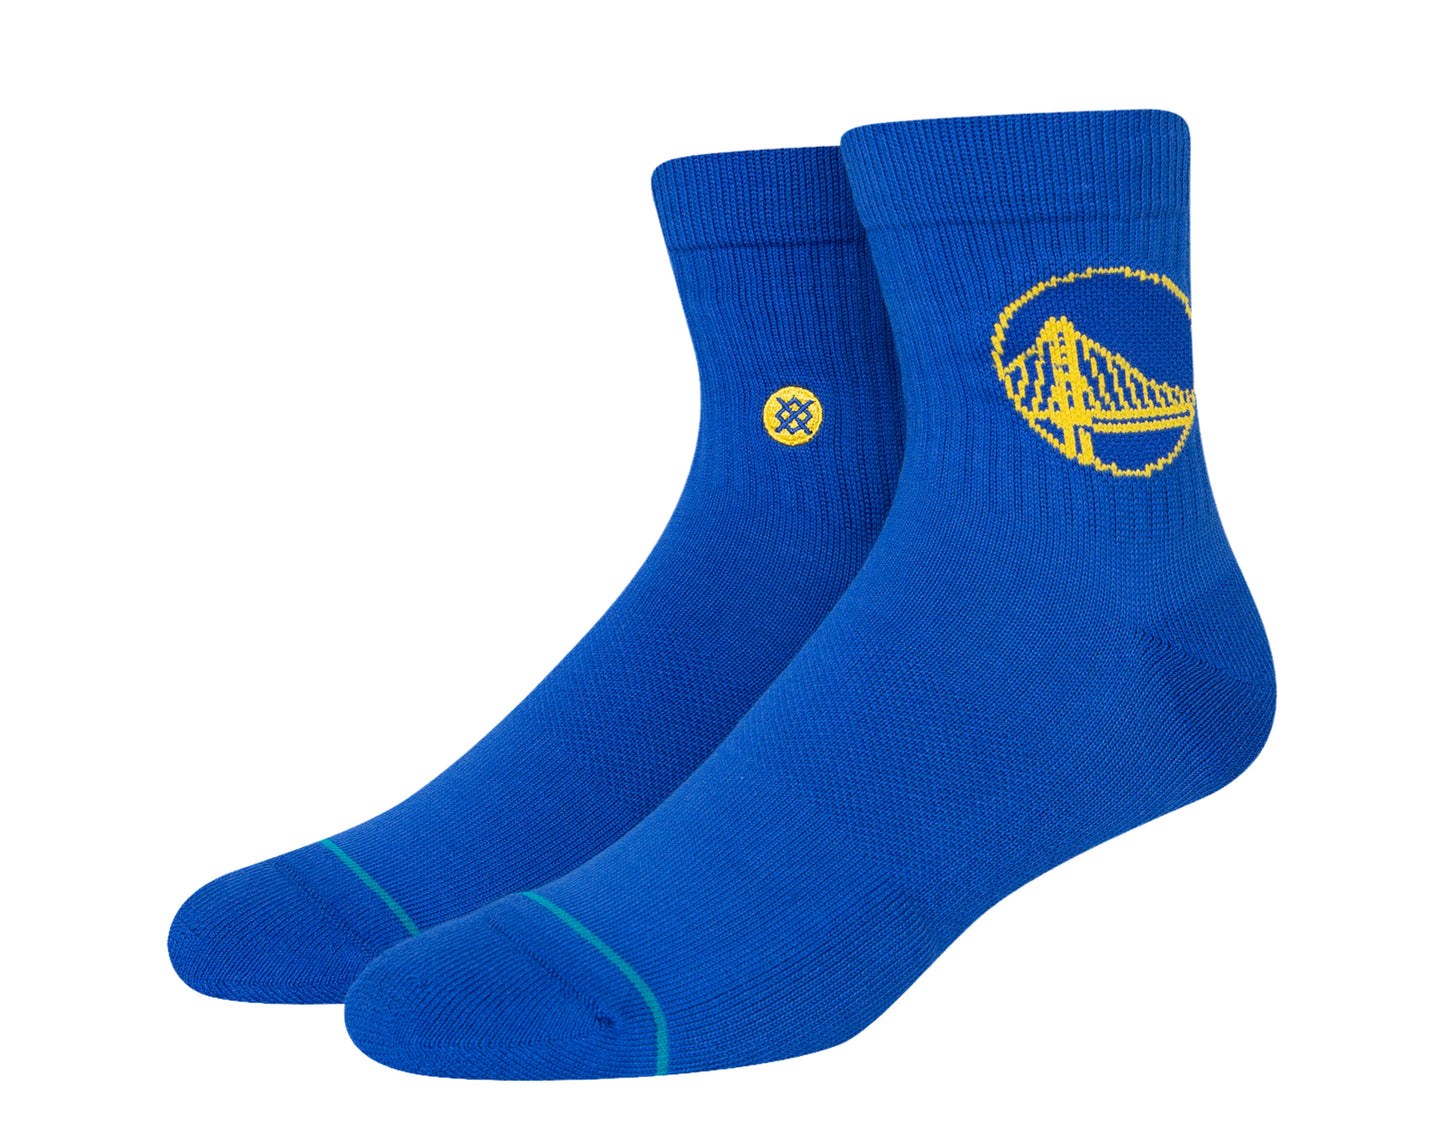 Stance x NBA Golden State Warriors Quarter Ankle Socks